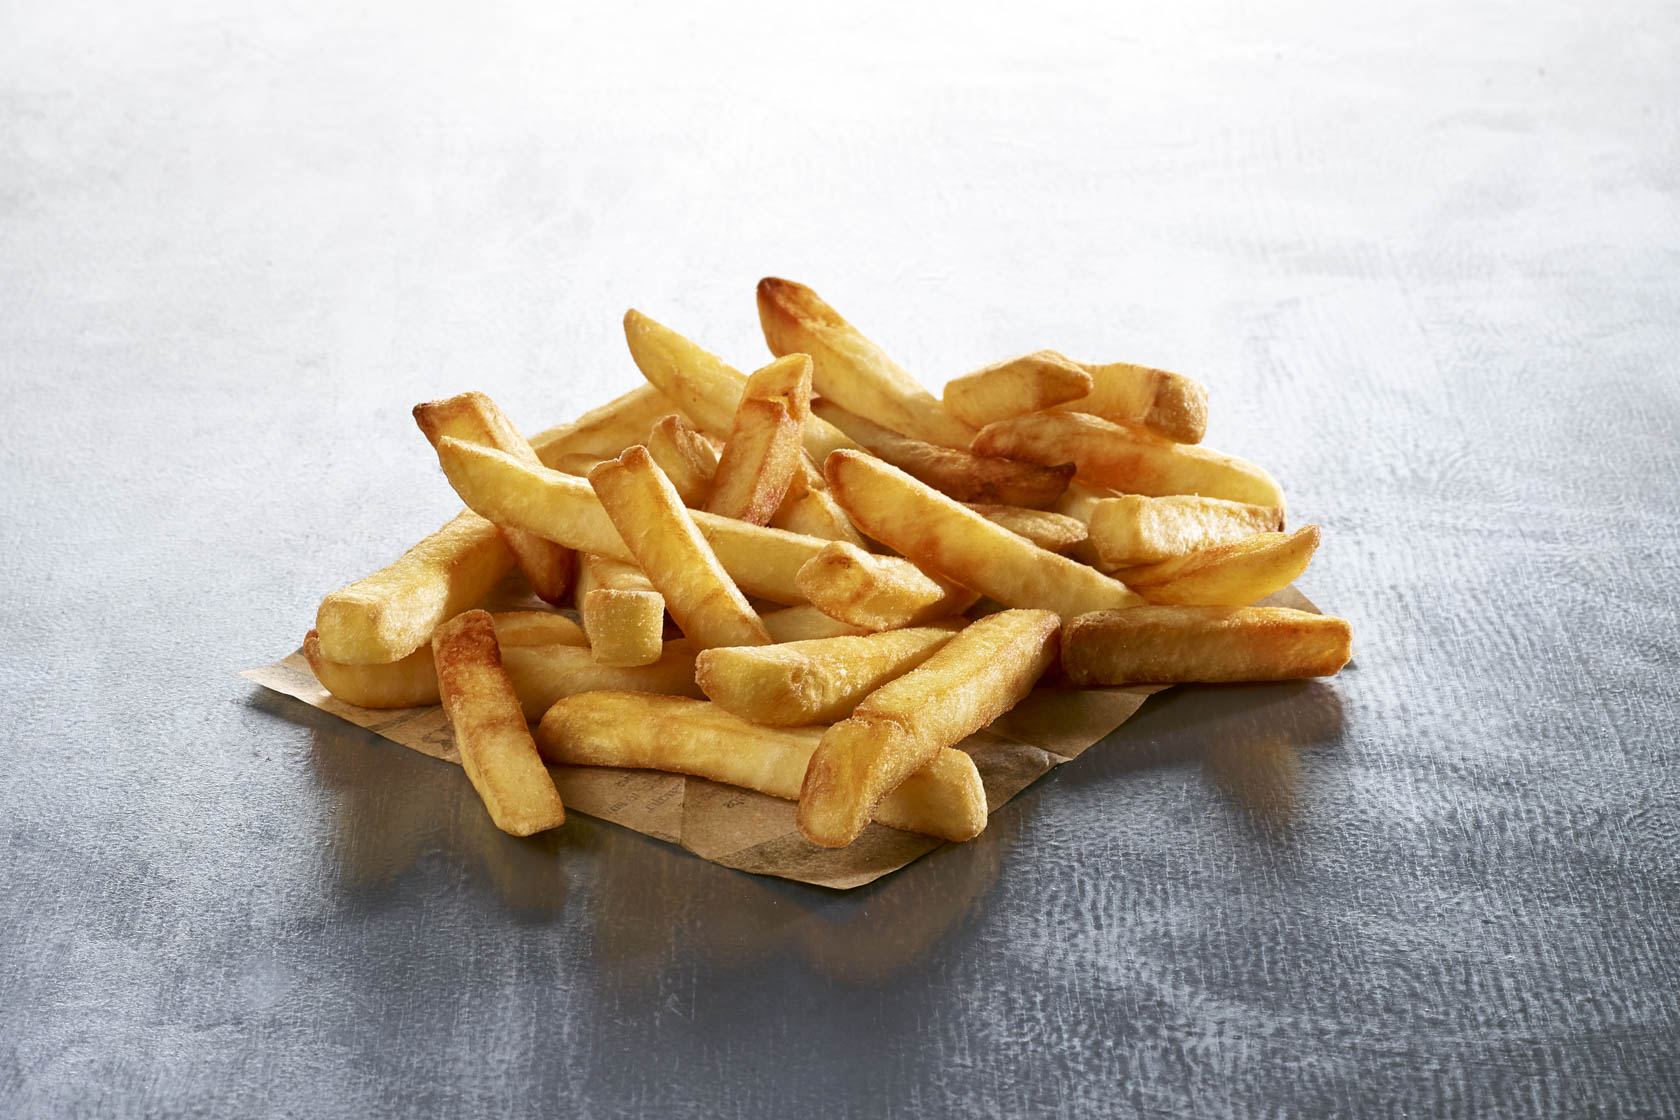 Bistro Style Fries